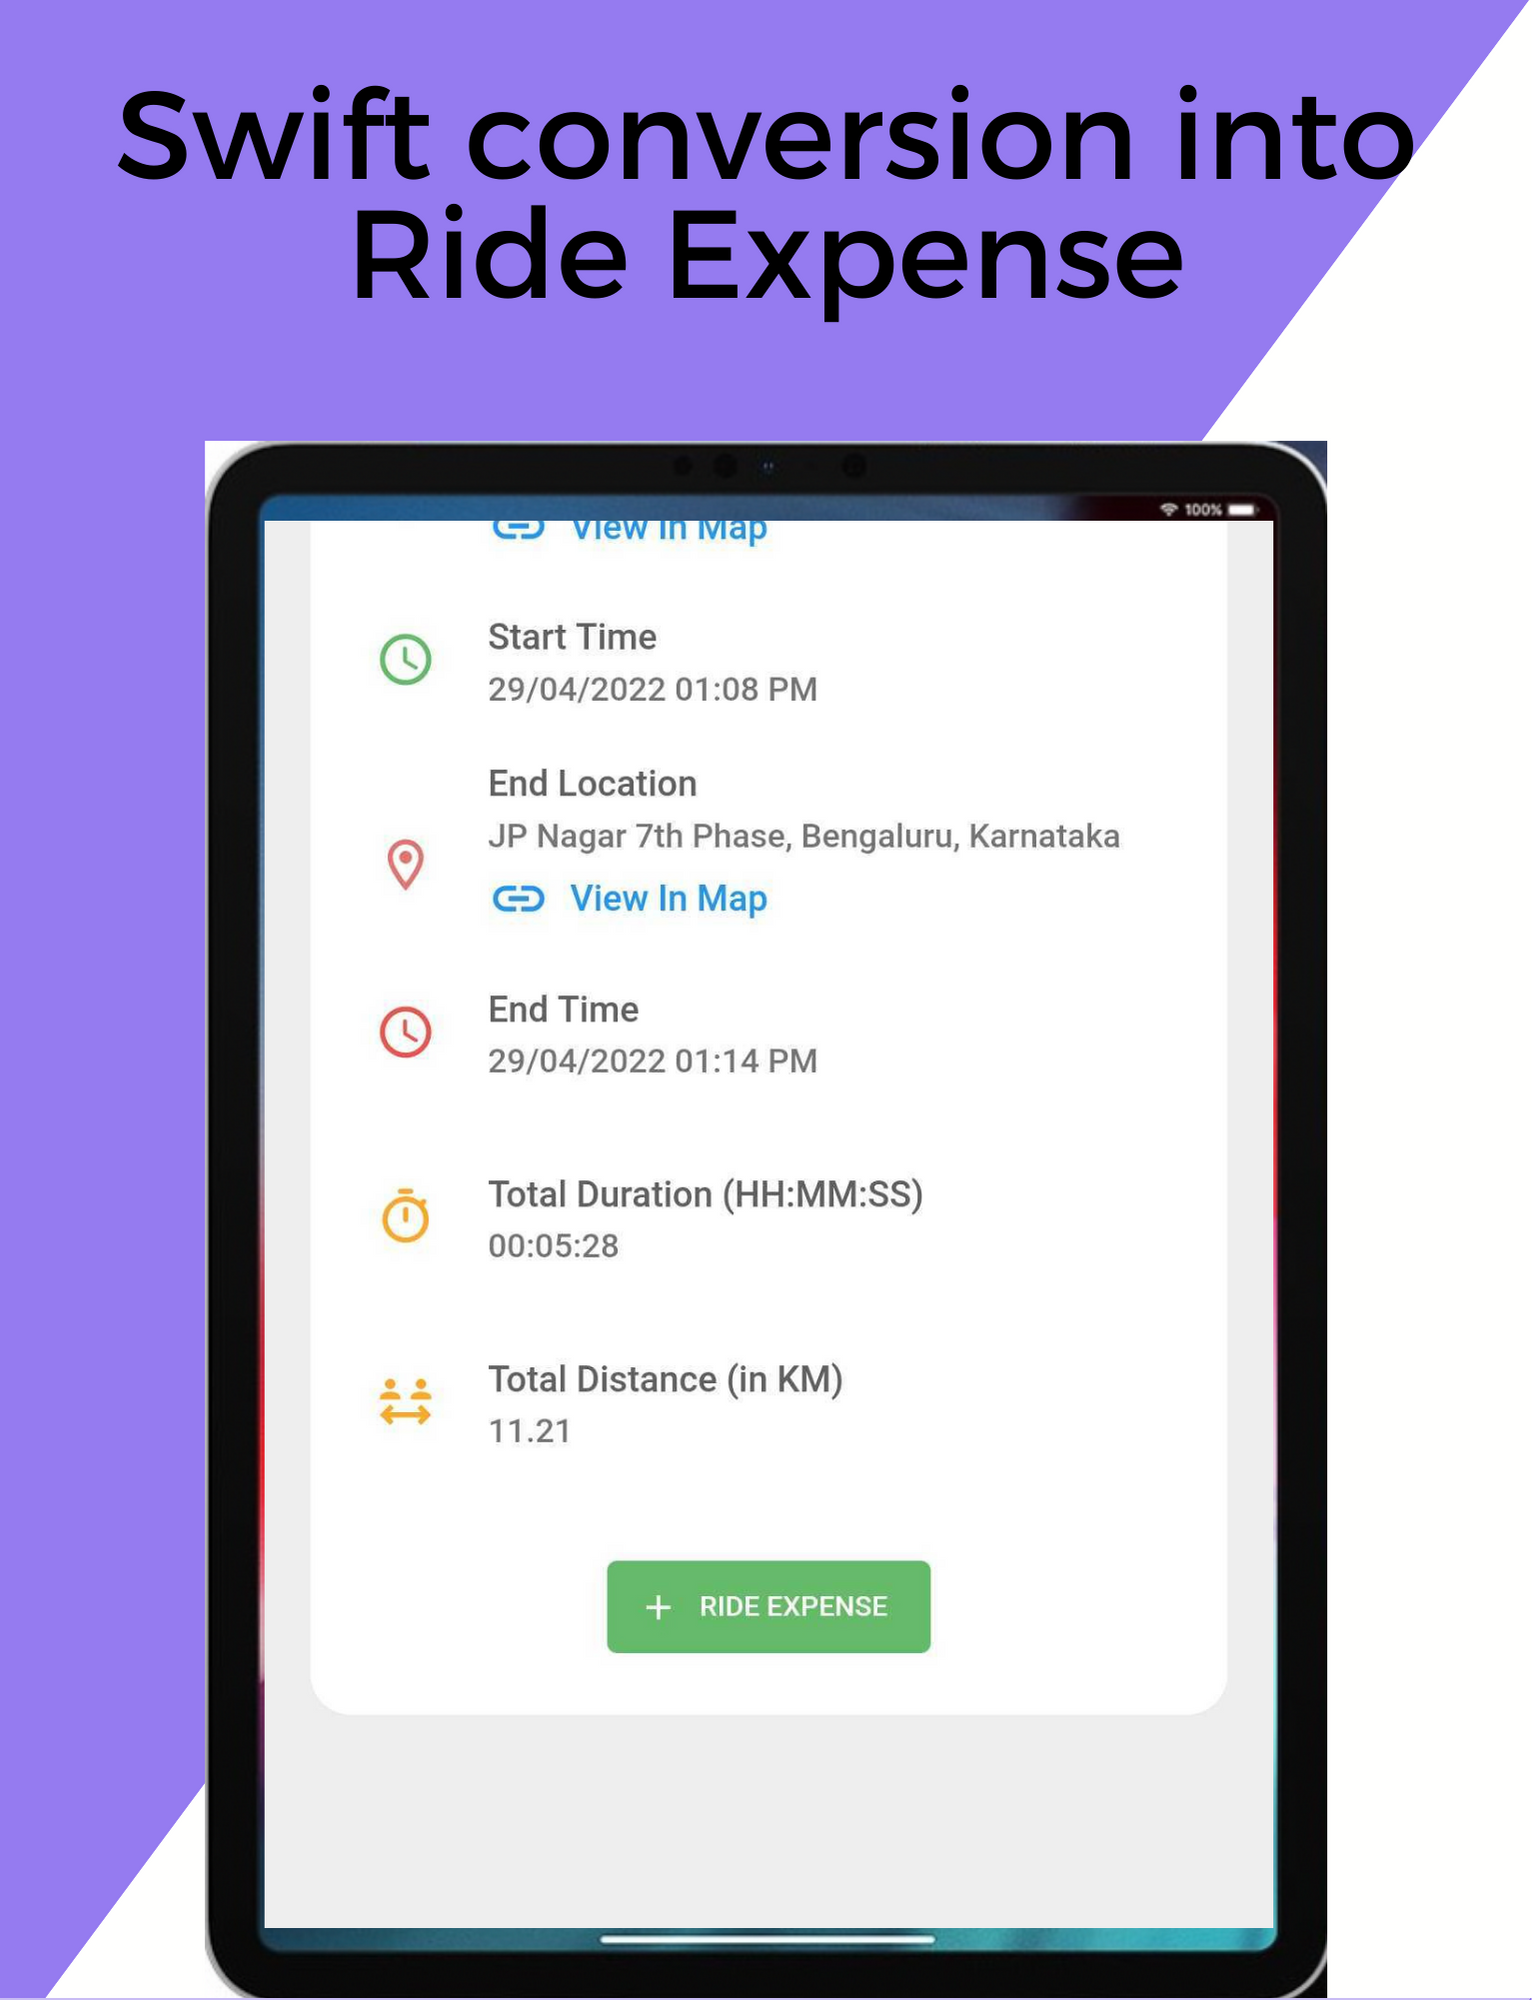 1-click conversion into Ride Expense